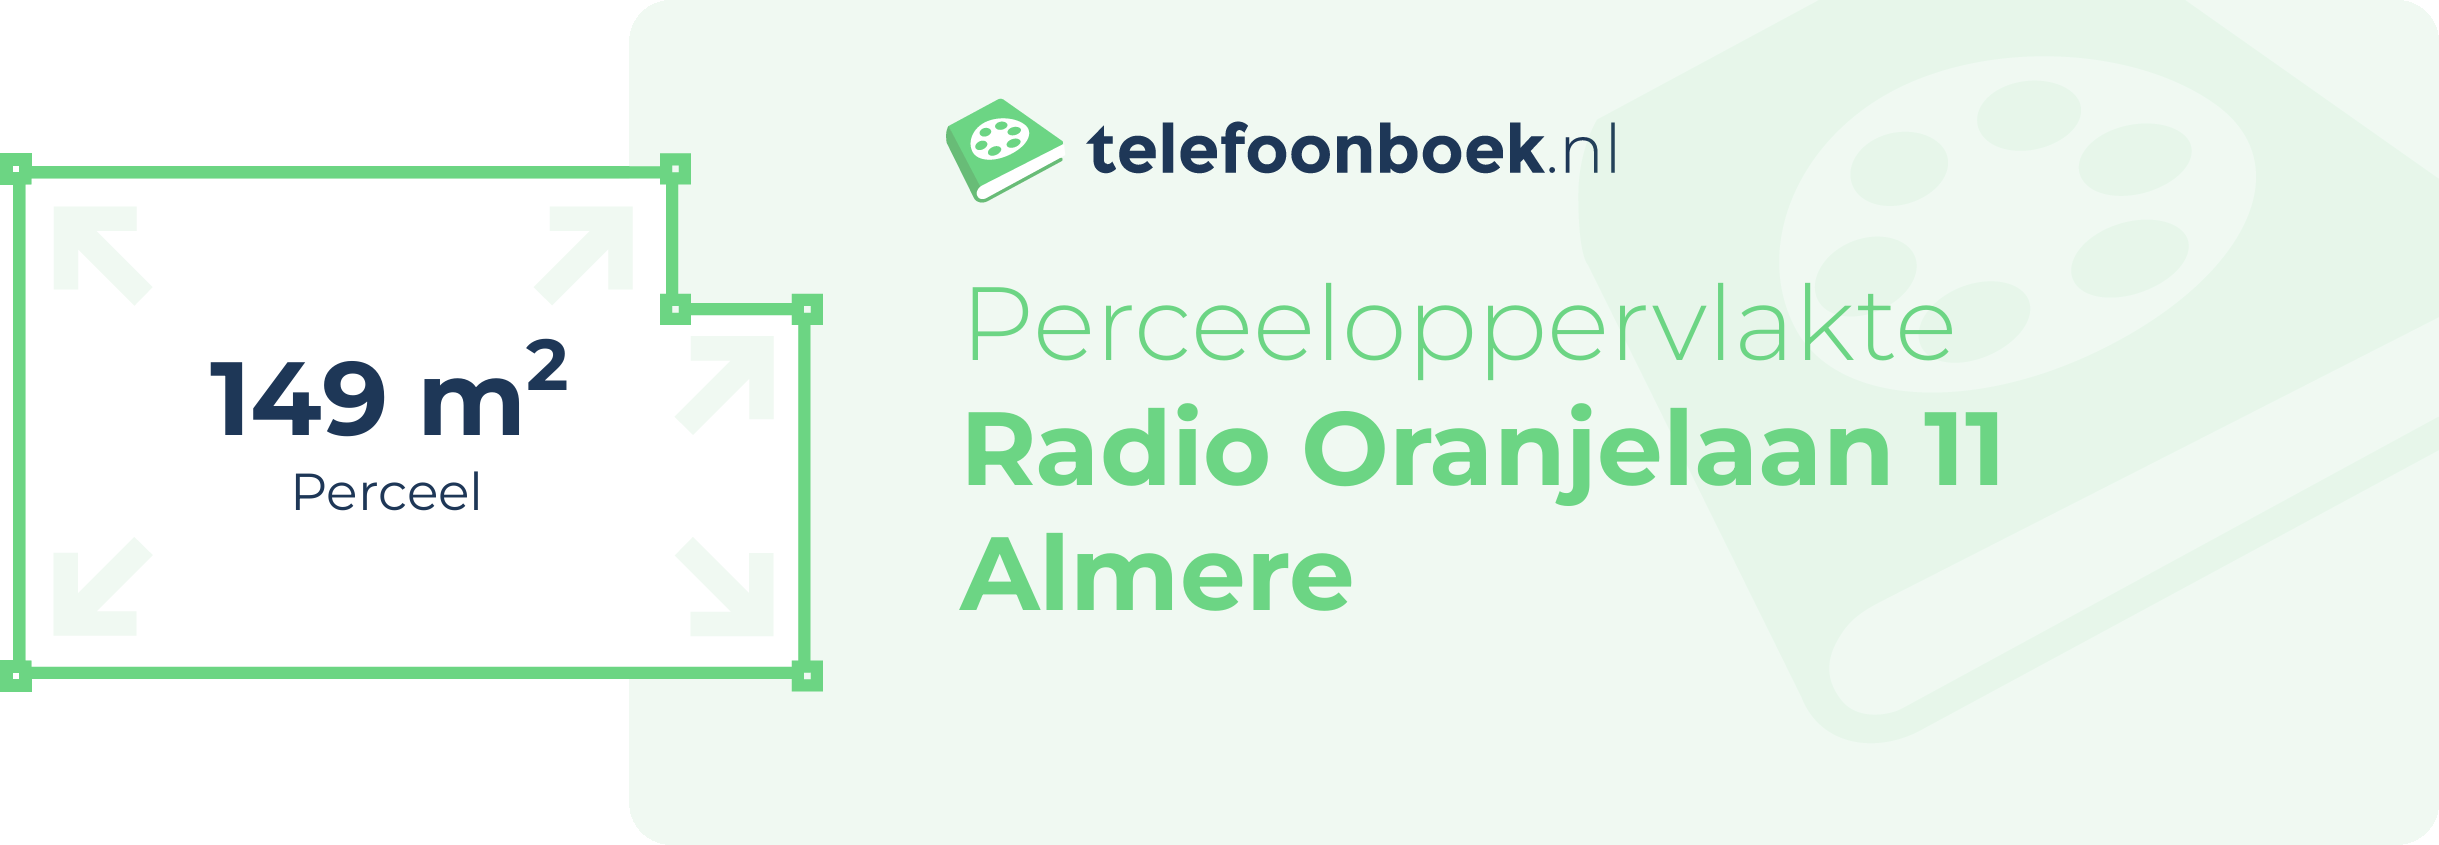 Perceeloppervlakte Radio Oranjelaan 11 Almere